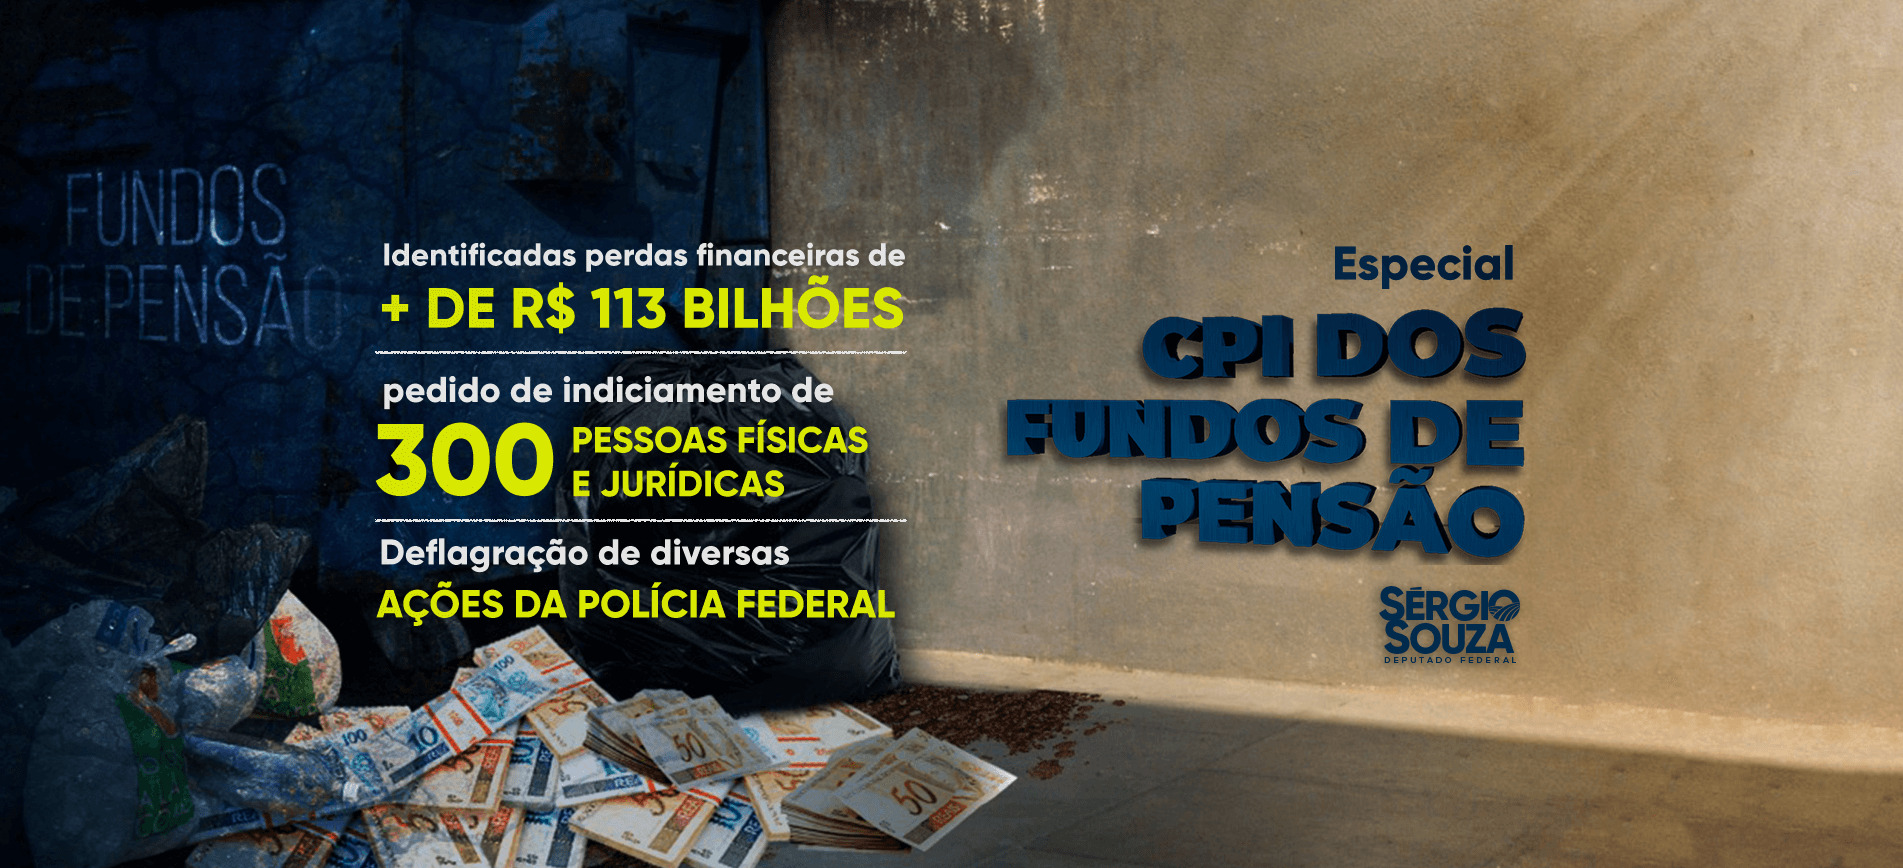 banner 02 fundos de pensao - Deputado Sérgio Souza - Paraná